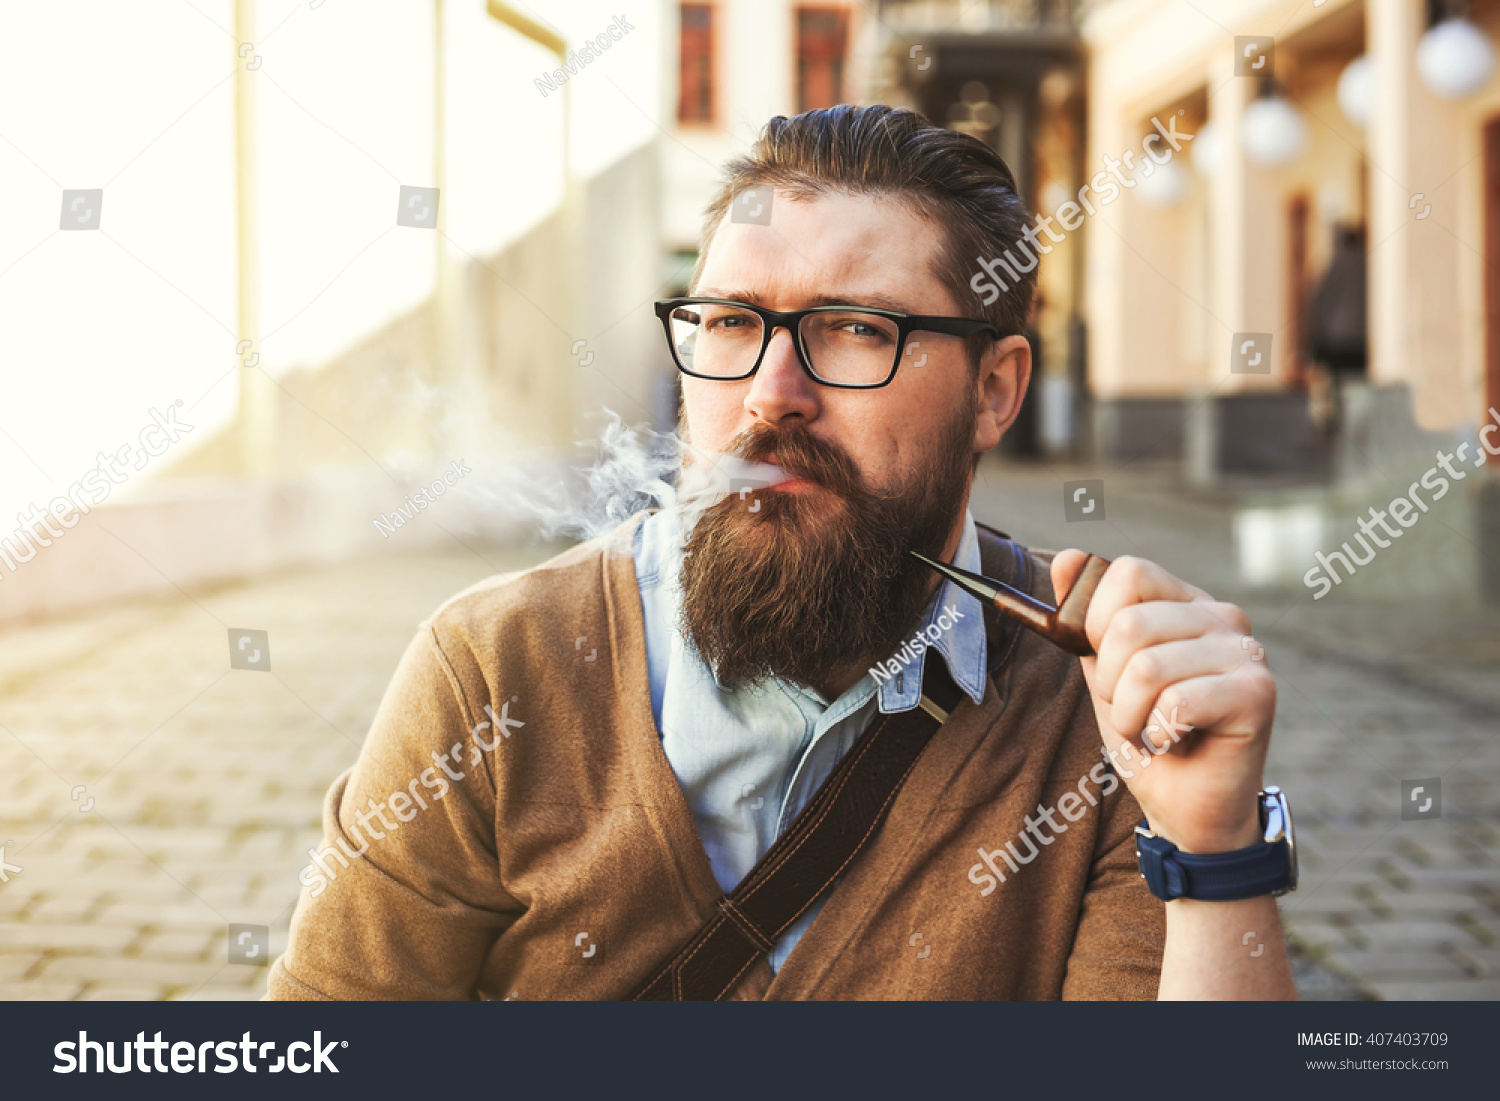 stock-photo-stylish-hipster-bearded-man-in-the-street-bike-leather-handbag-glasses-smoking-pipe-vintage-407403709.jpg